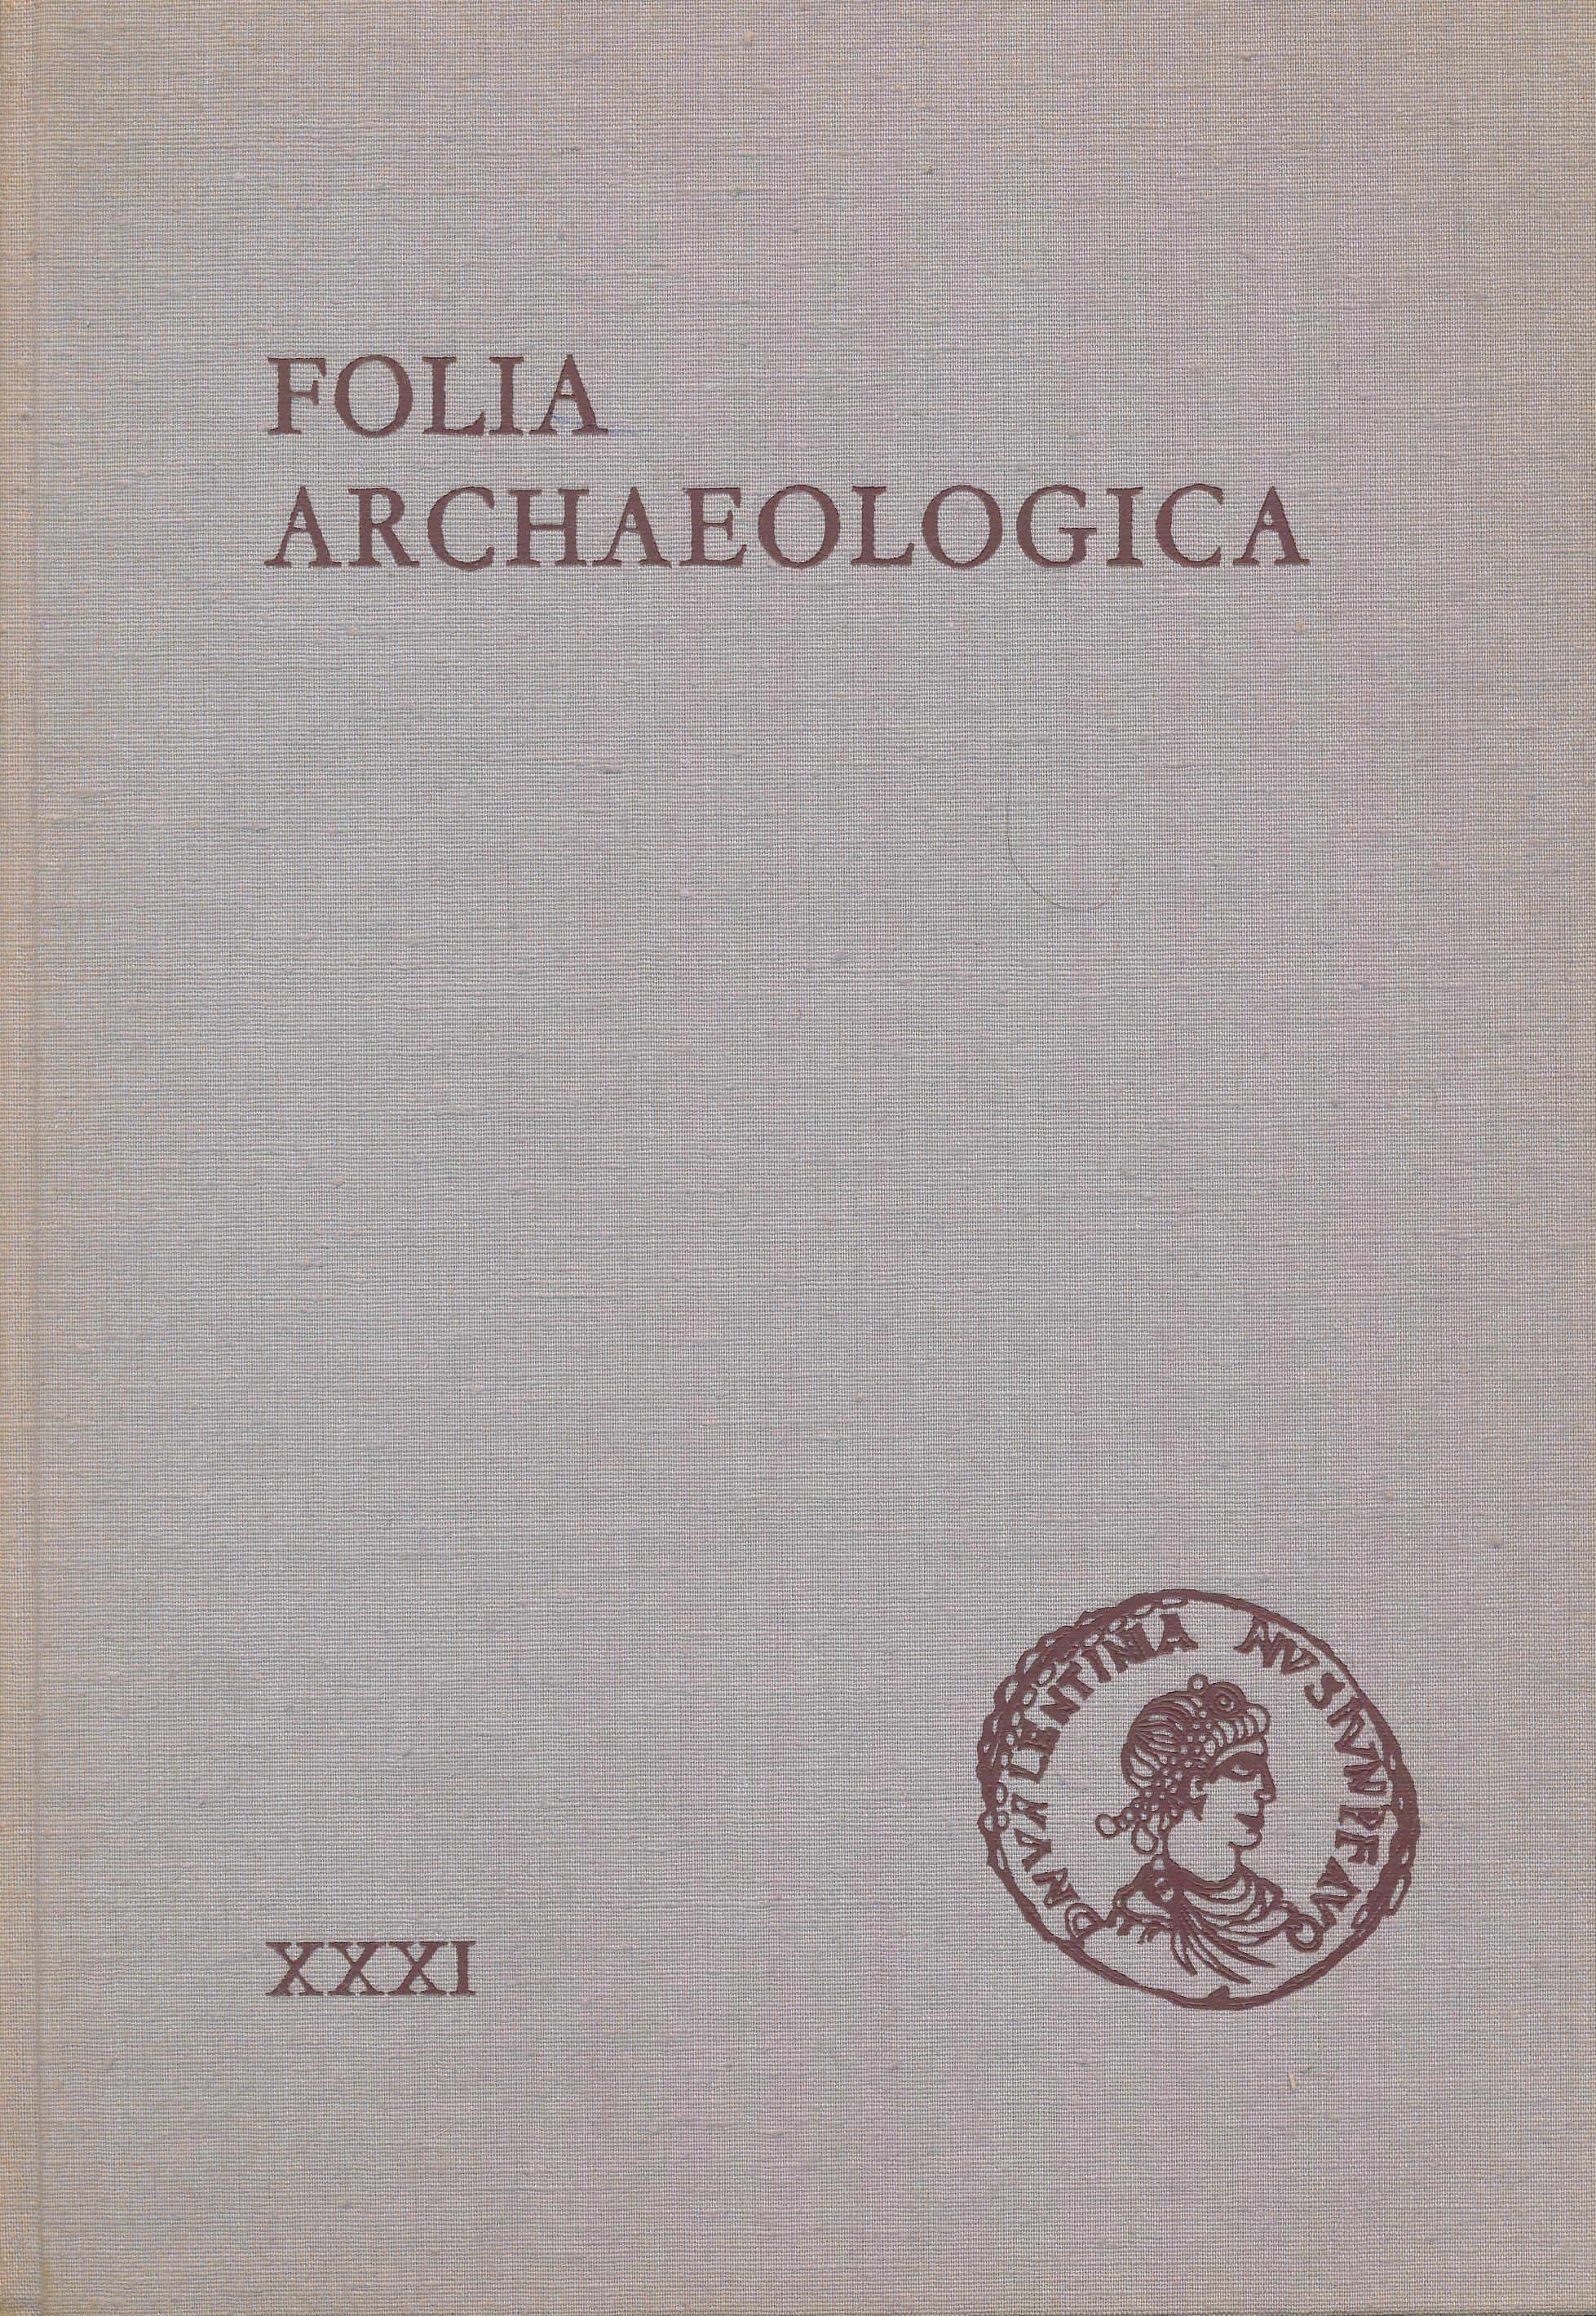 Folia archaeologica XXXI. (Erkel Ferenc Területi Múzeum, Gyula CC BY-NC-SA)